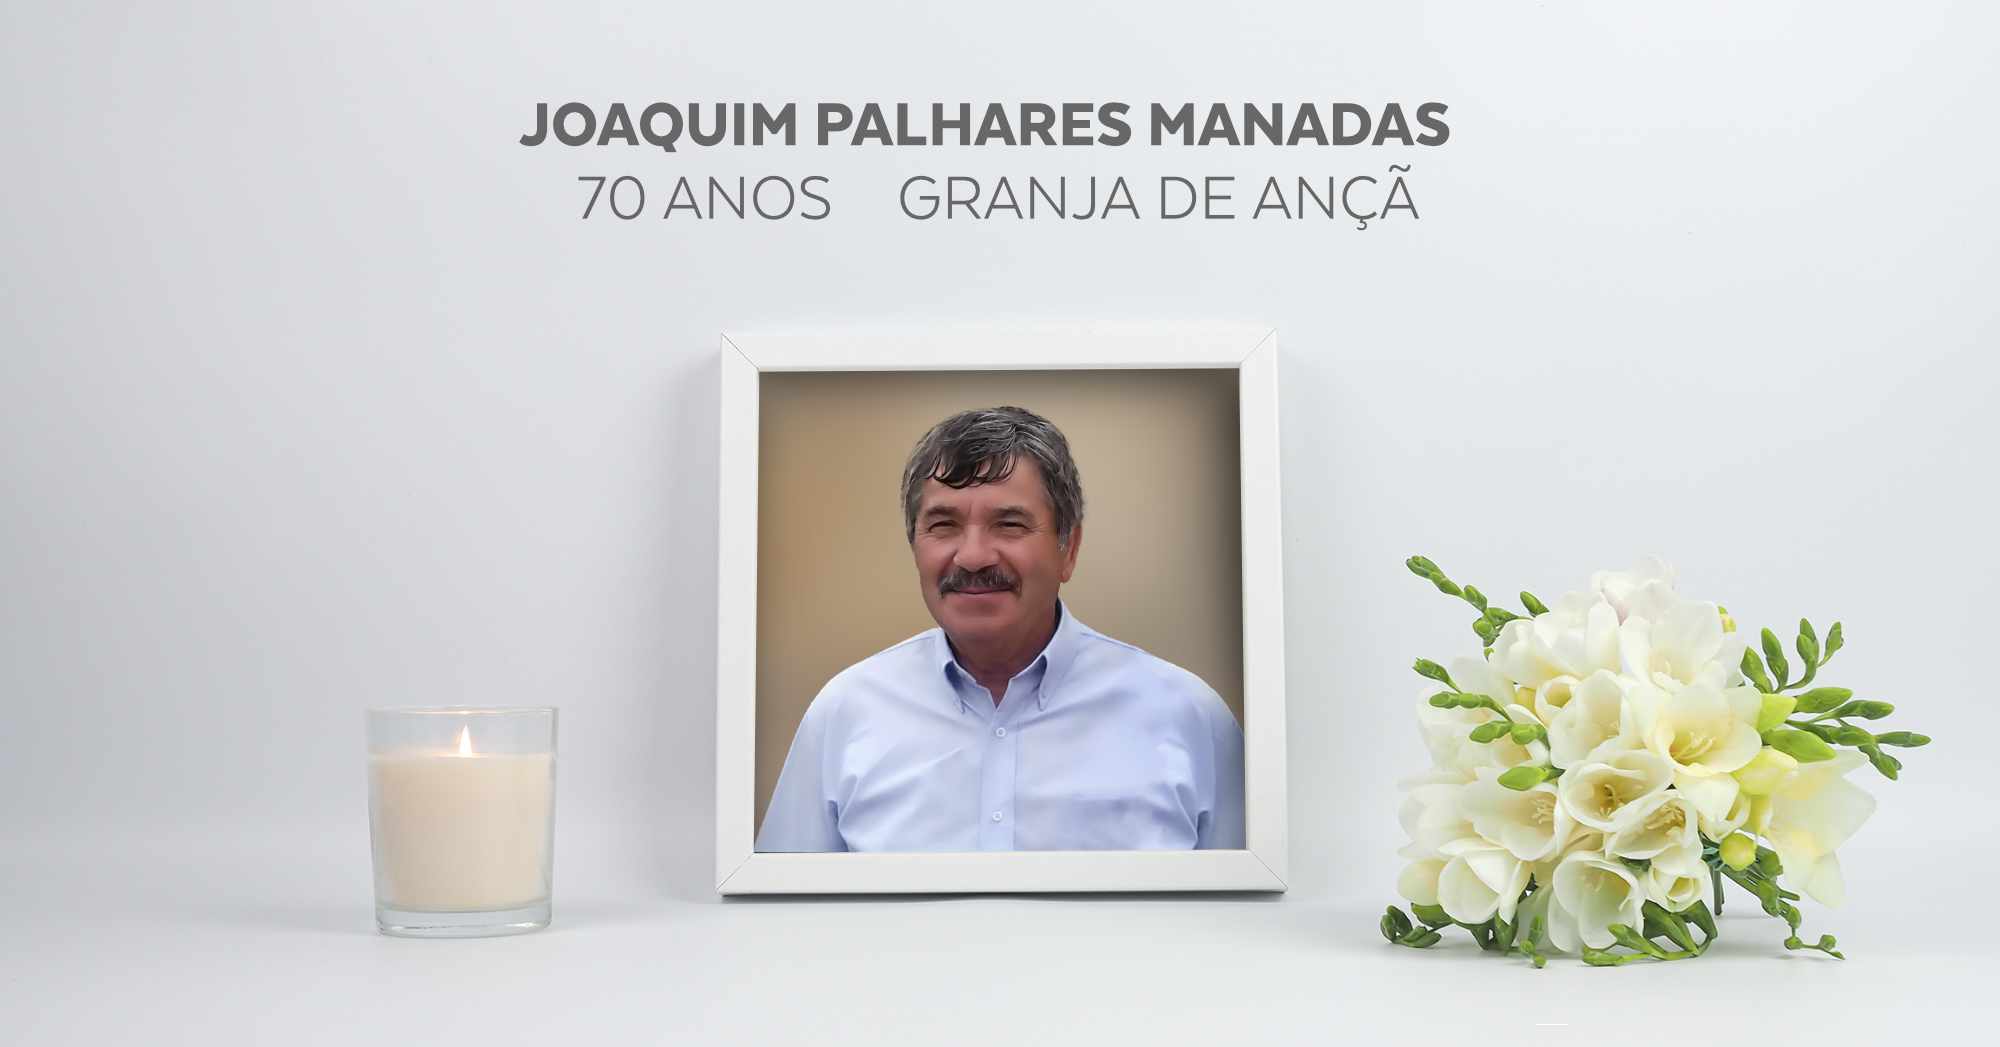 Joaquim Palhares Manadas